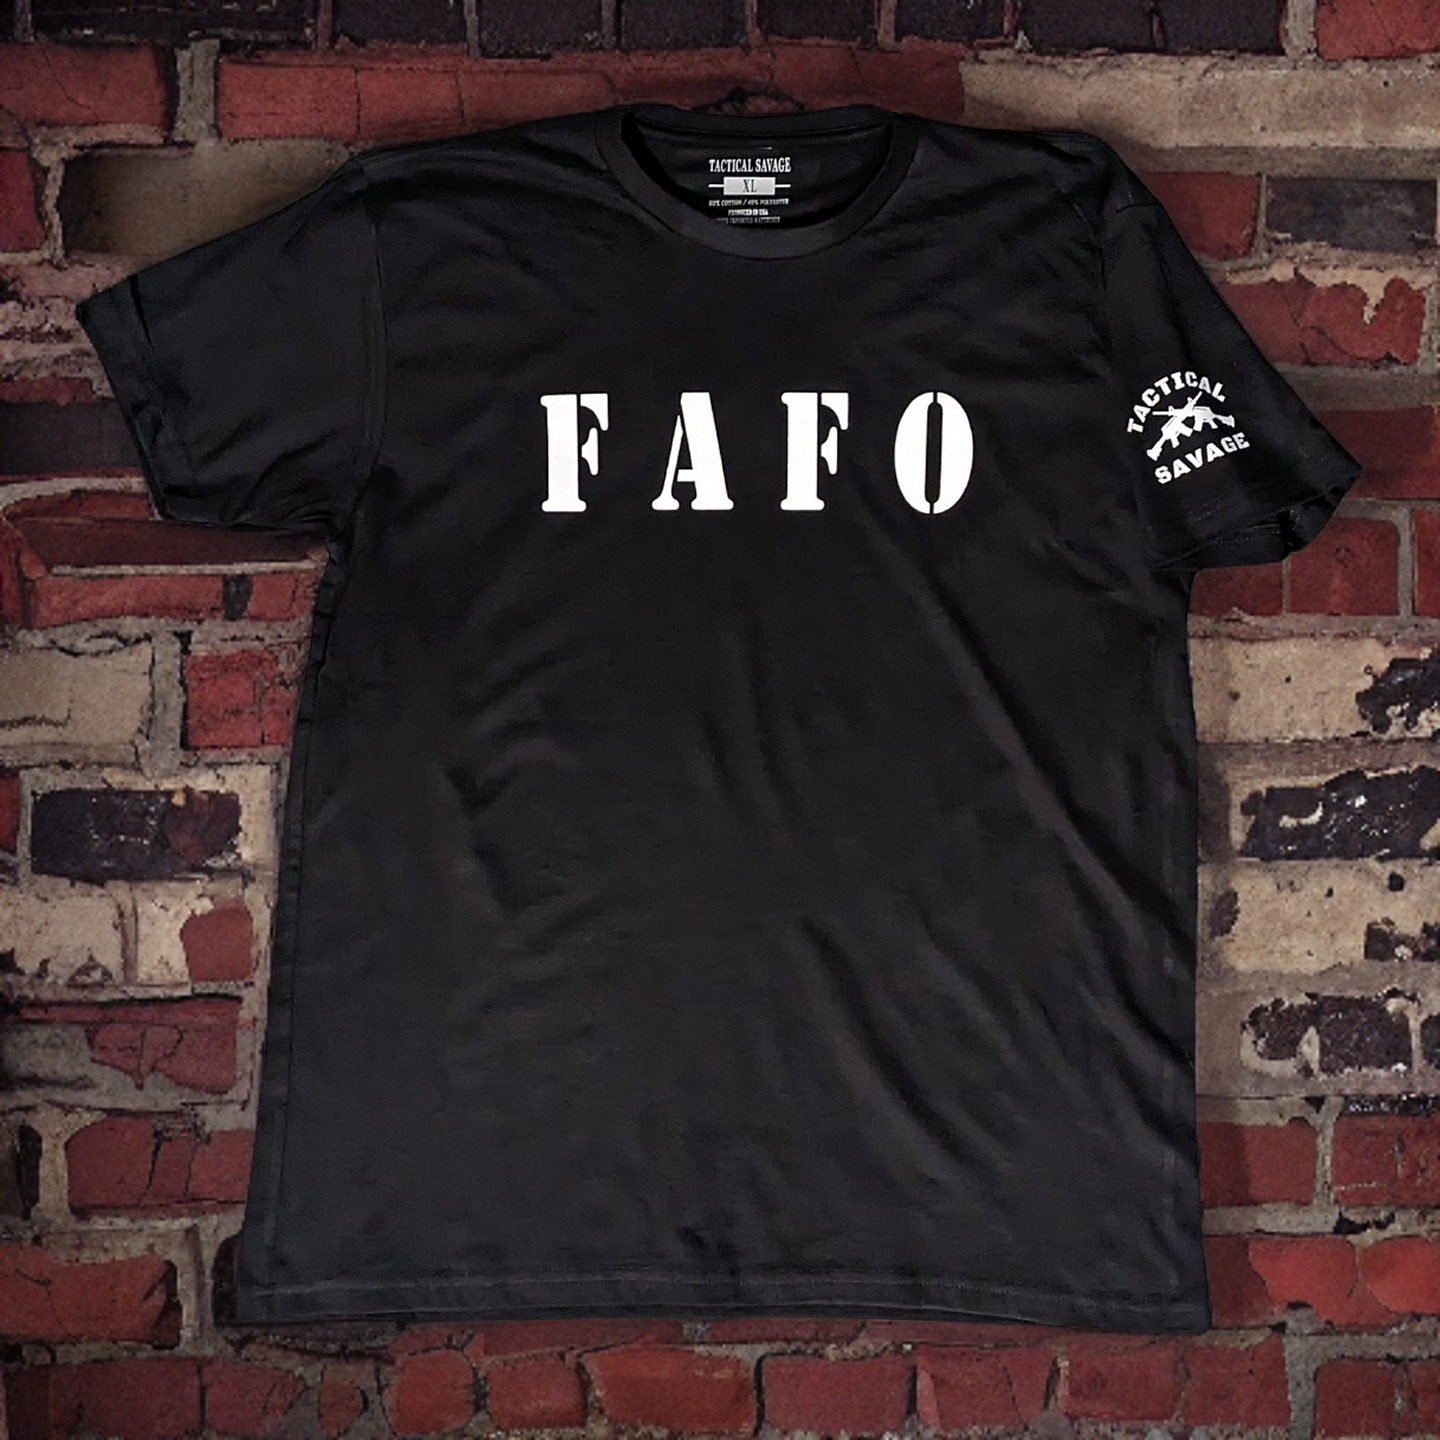 FAFO tee (black)